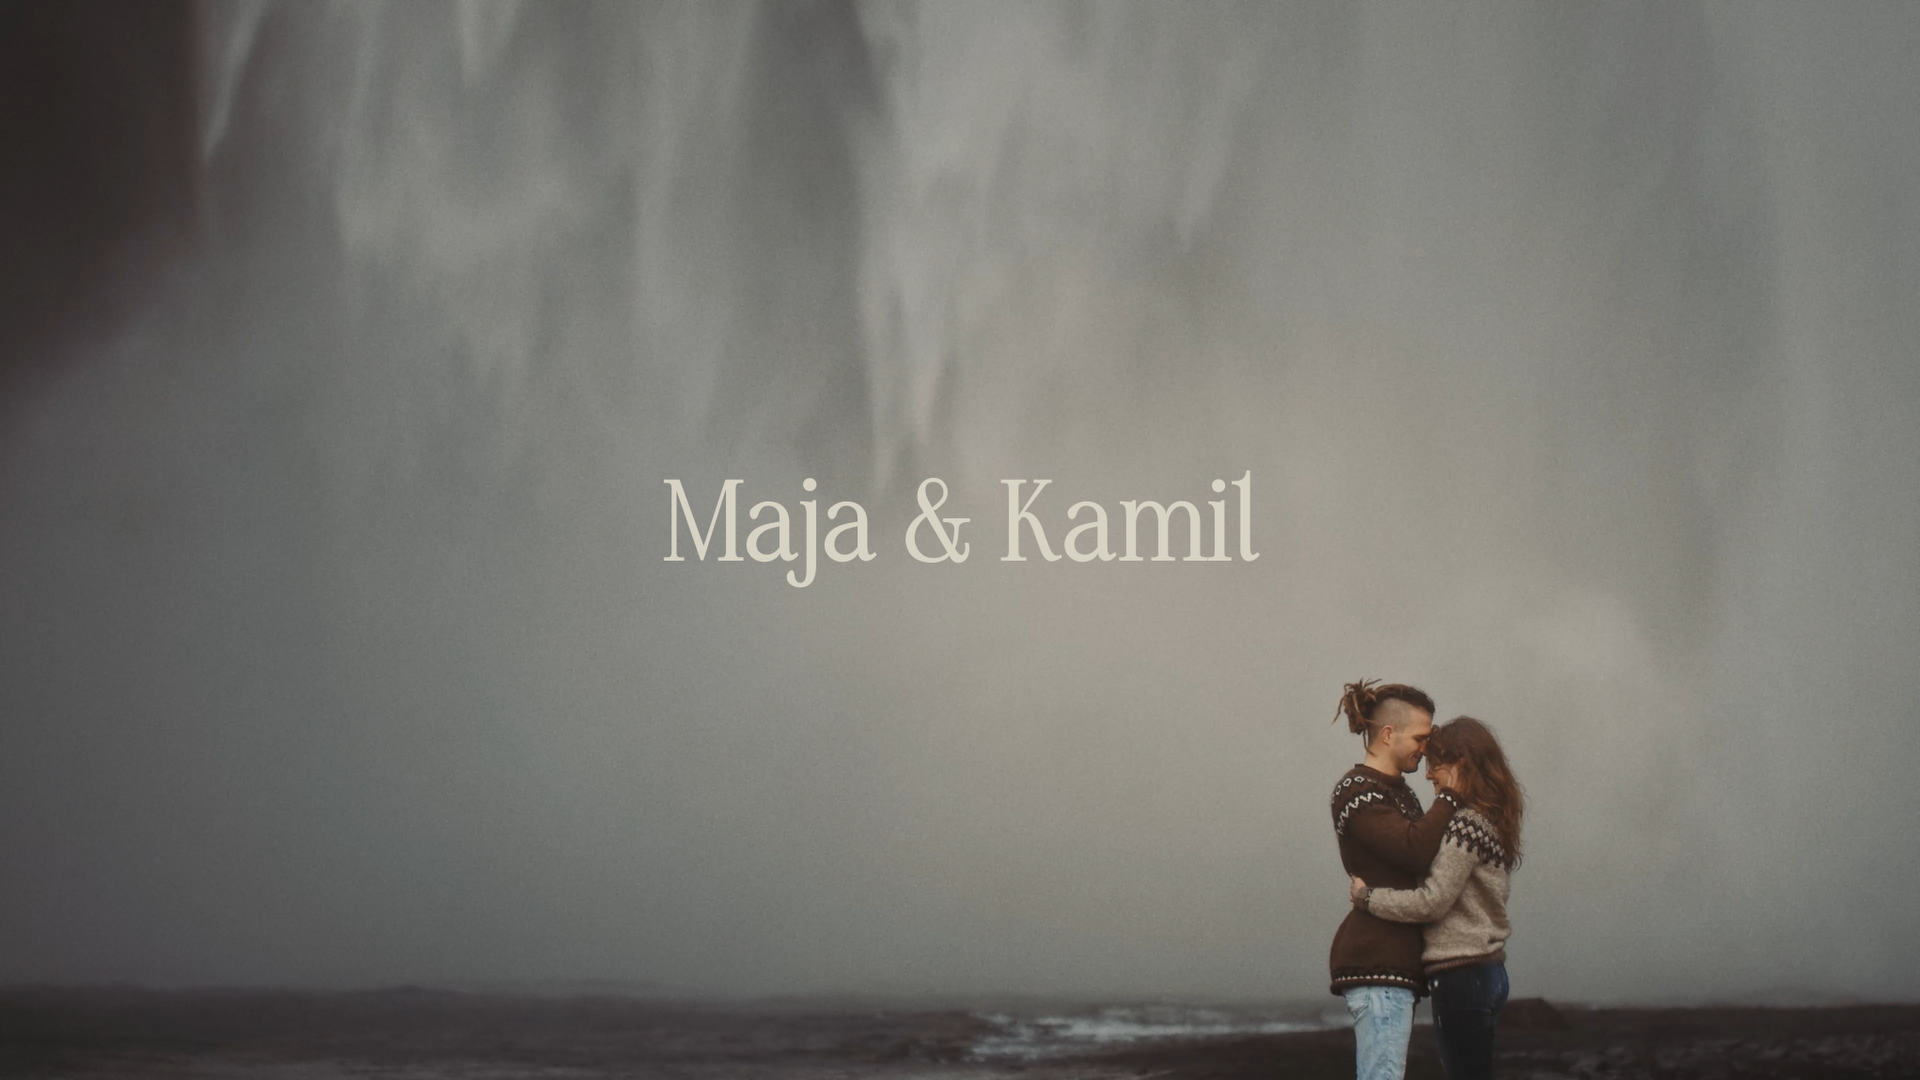 Image of Maja and Kamil